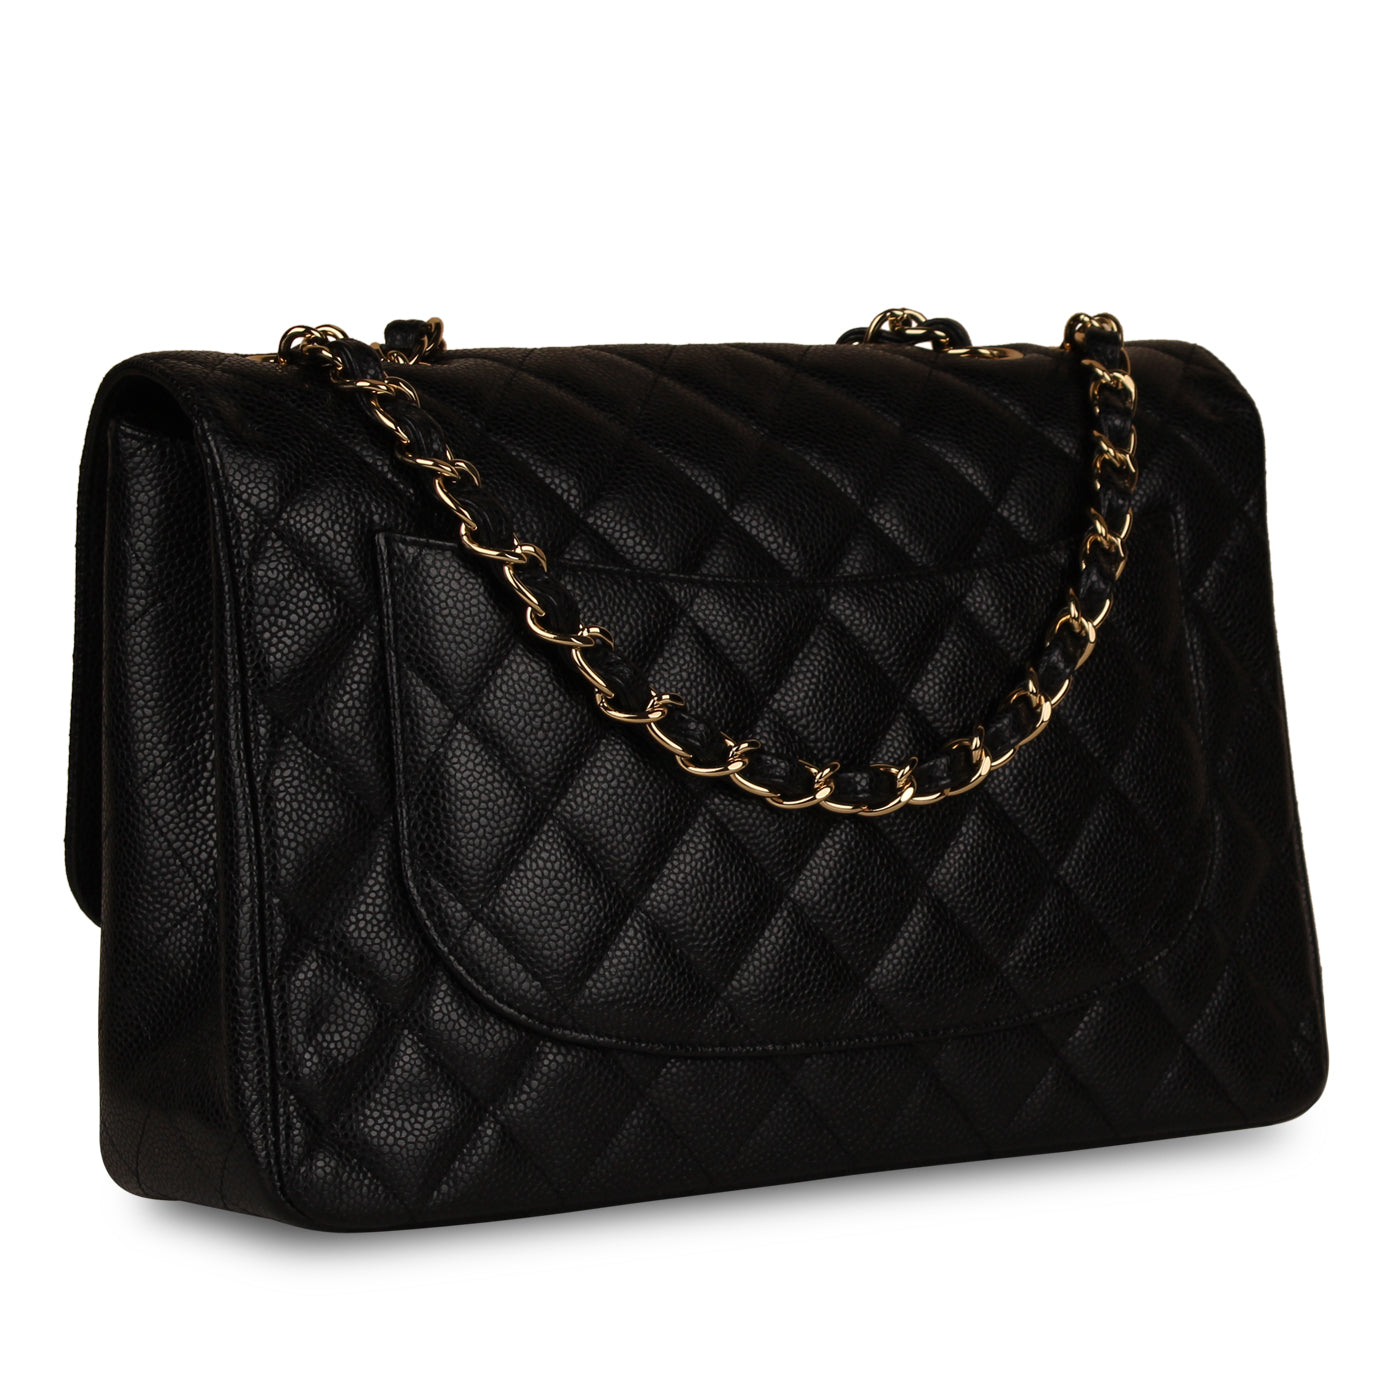 Chanel - Classic Flap Bag - Jumbo - Black Caviar - GHW